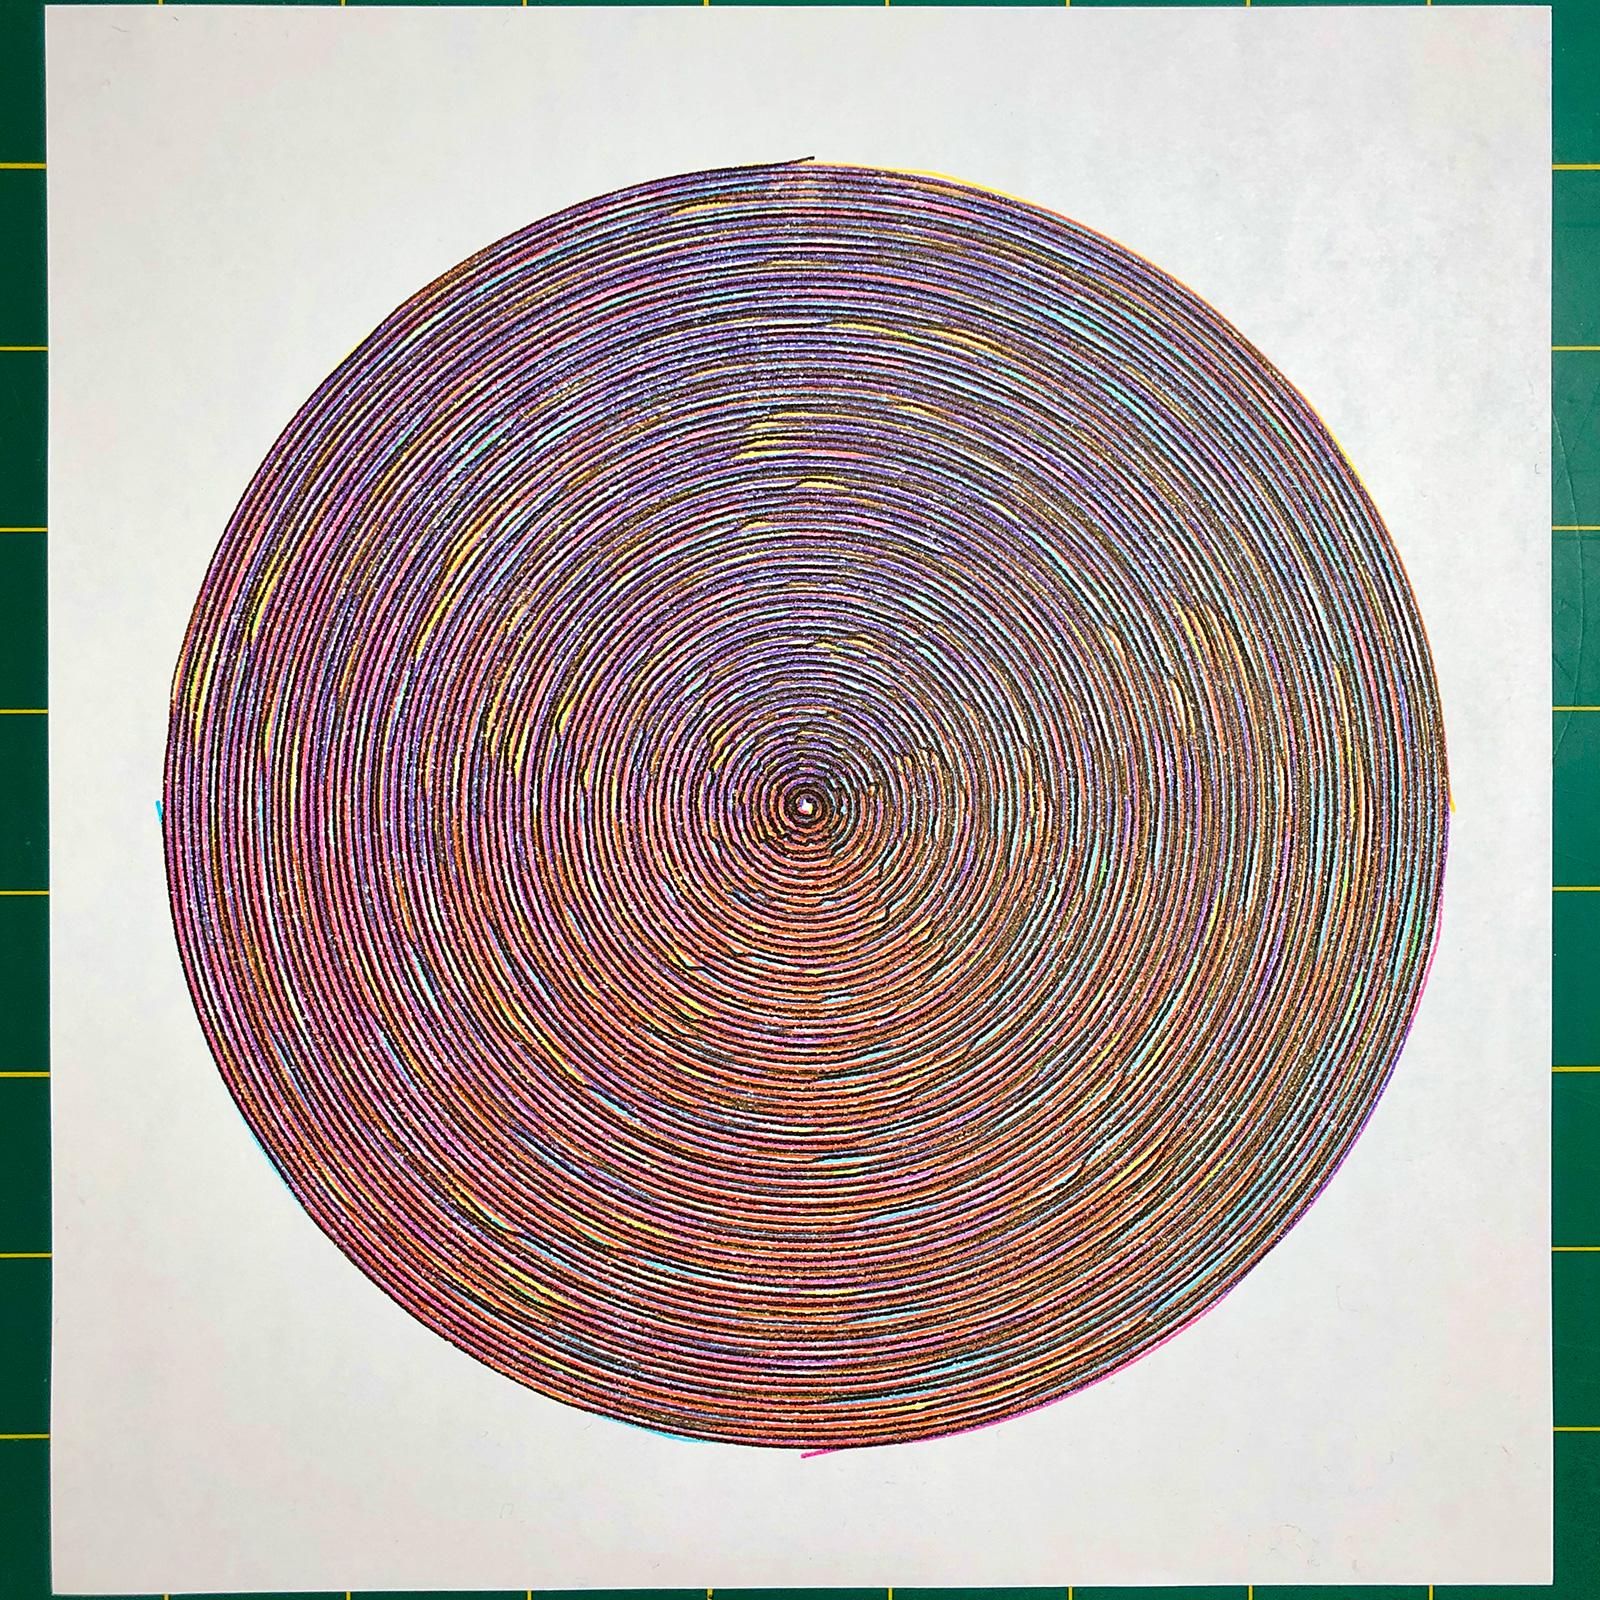 The complete multi-coloured spiral centered on white square paper